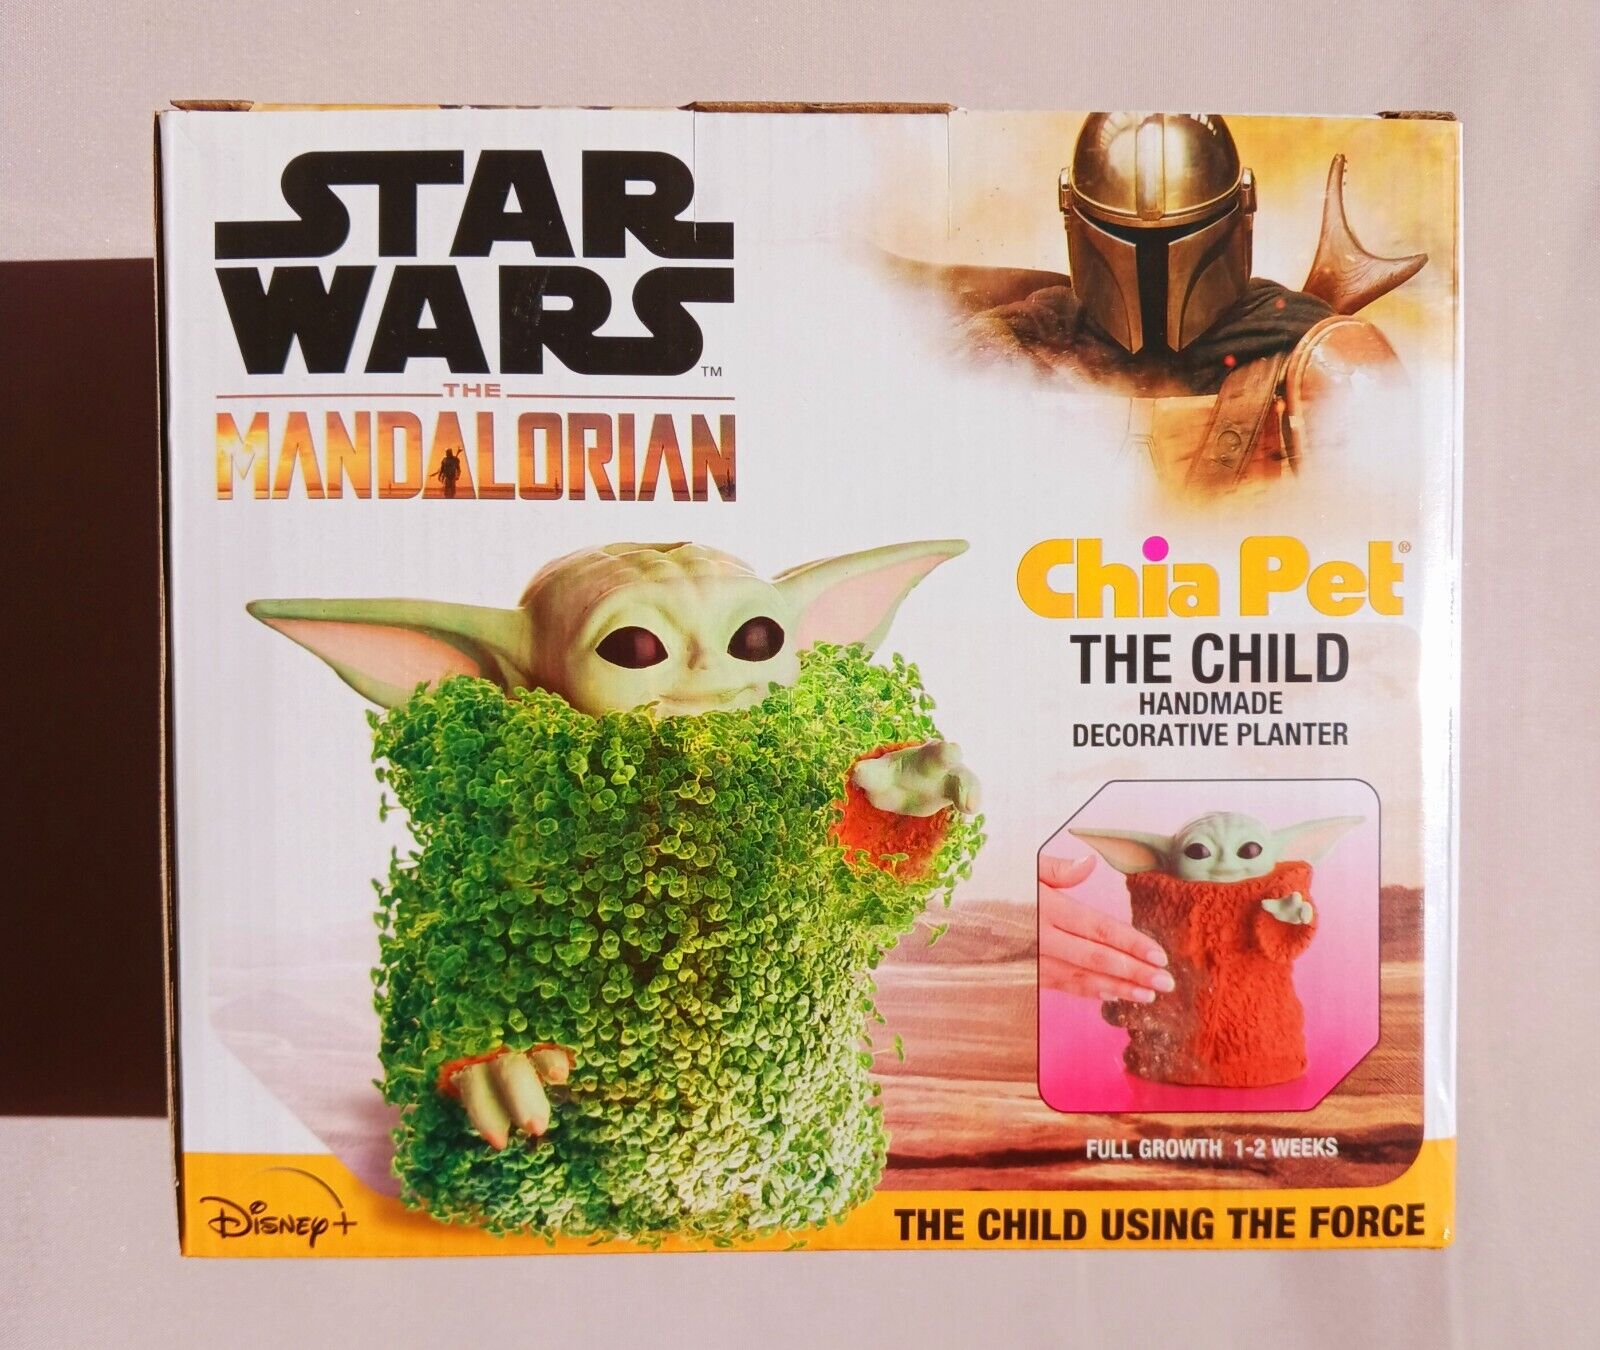 Chia Pet Star Wars The Mandalorian The Child (aka Baby Yoda, Aka Grogu)